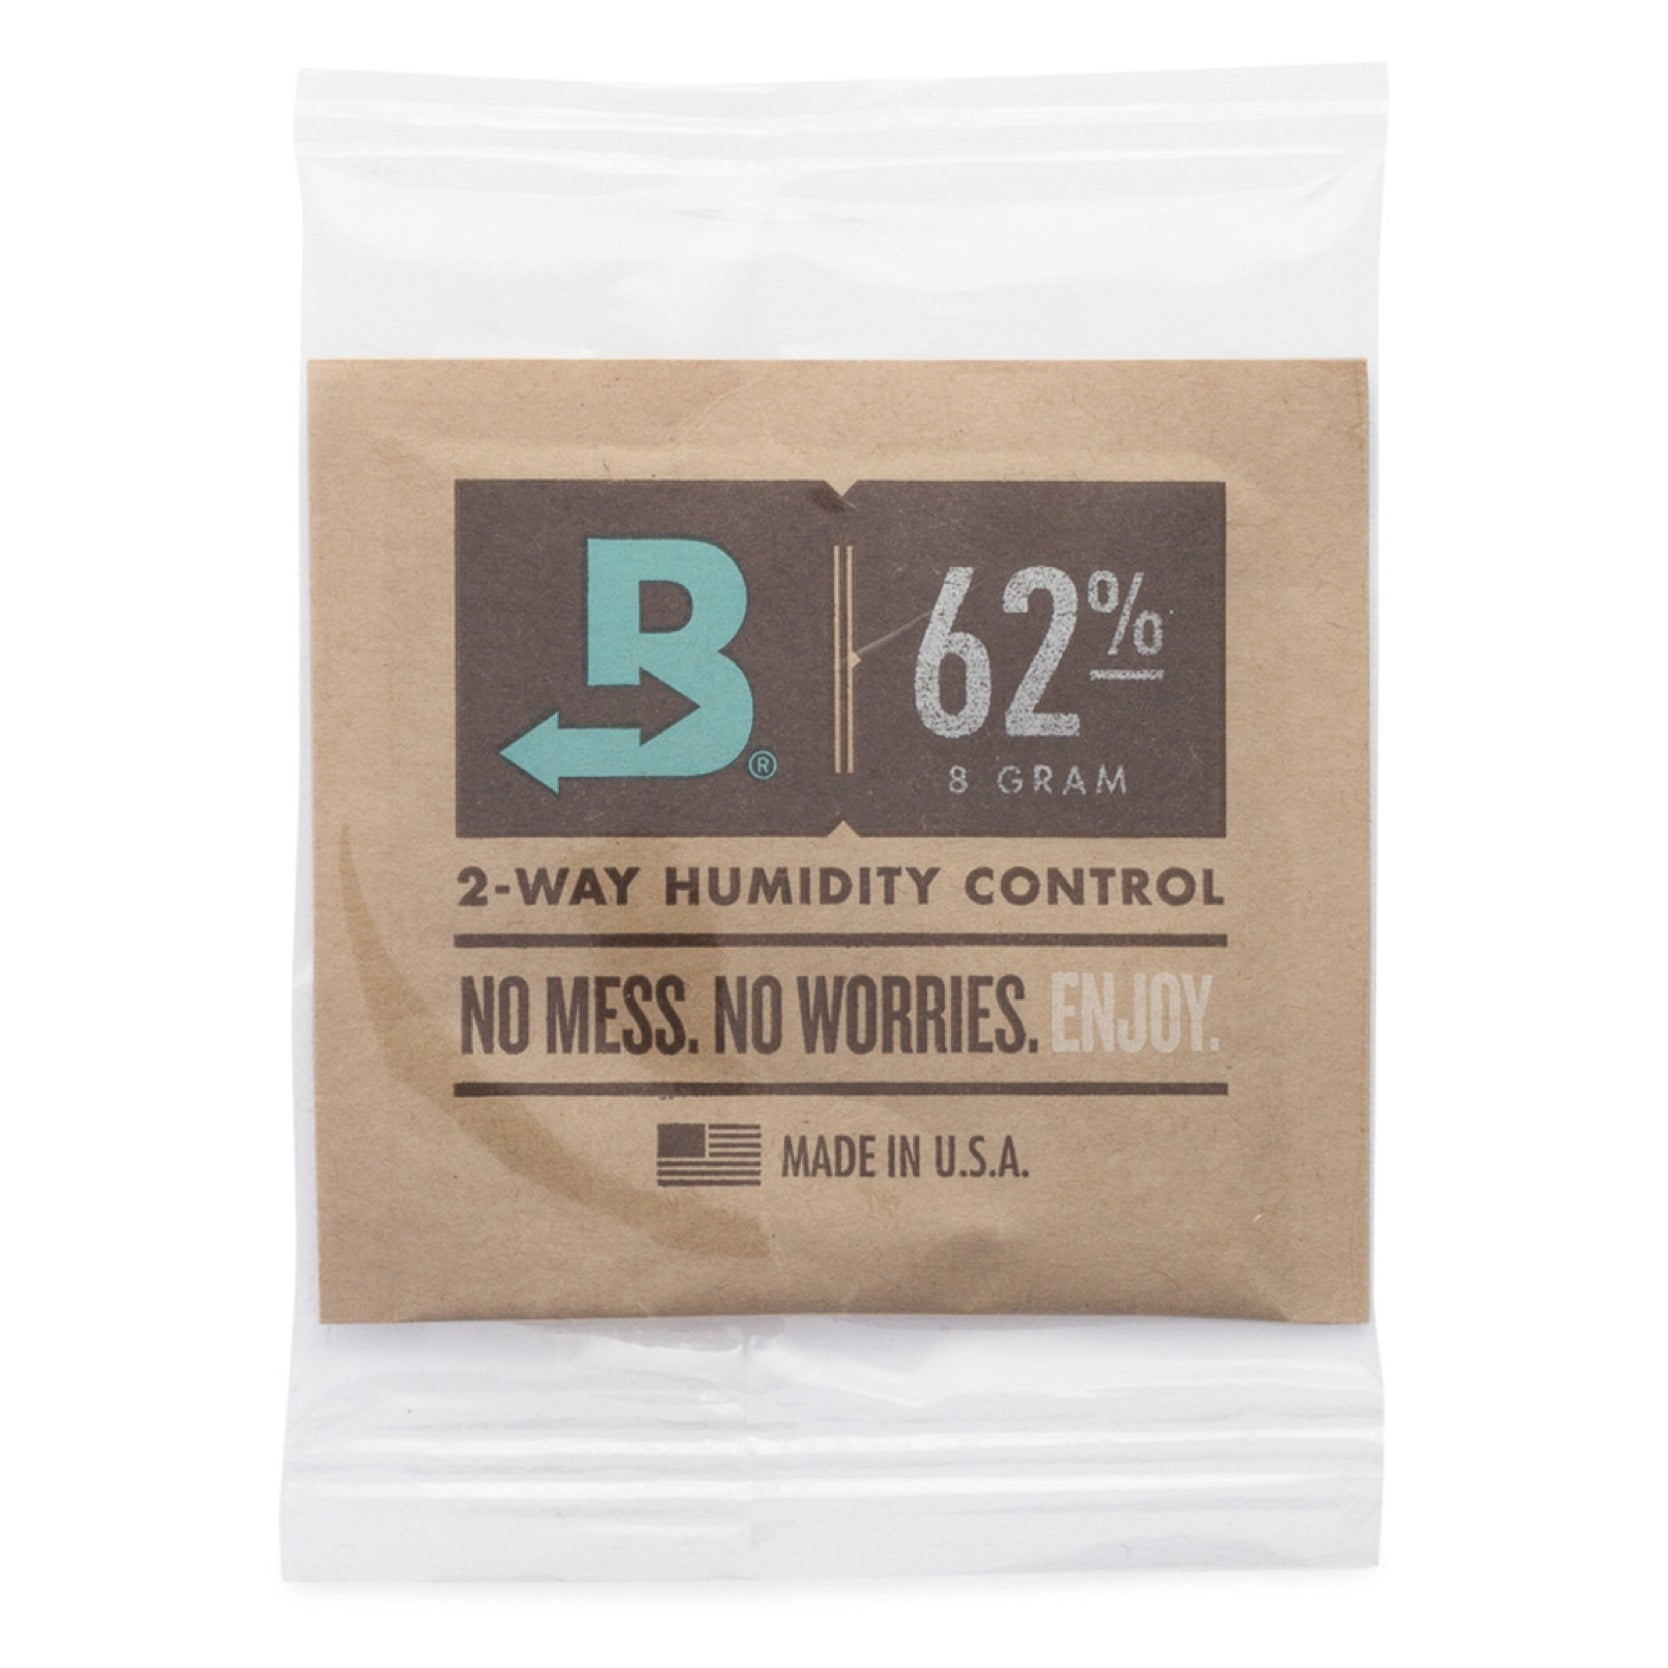 Boveda 62% 2-Way Relative Humidity Control (8 Gram Packs) 